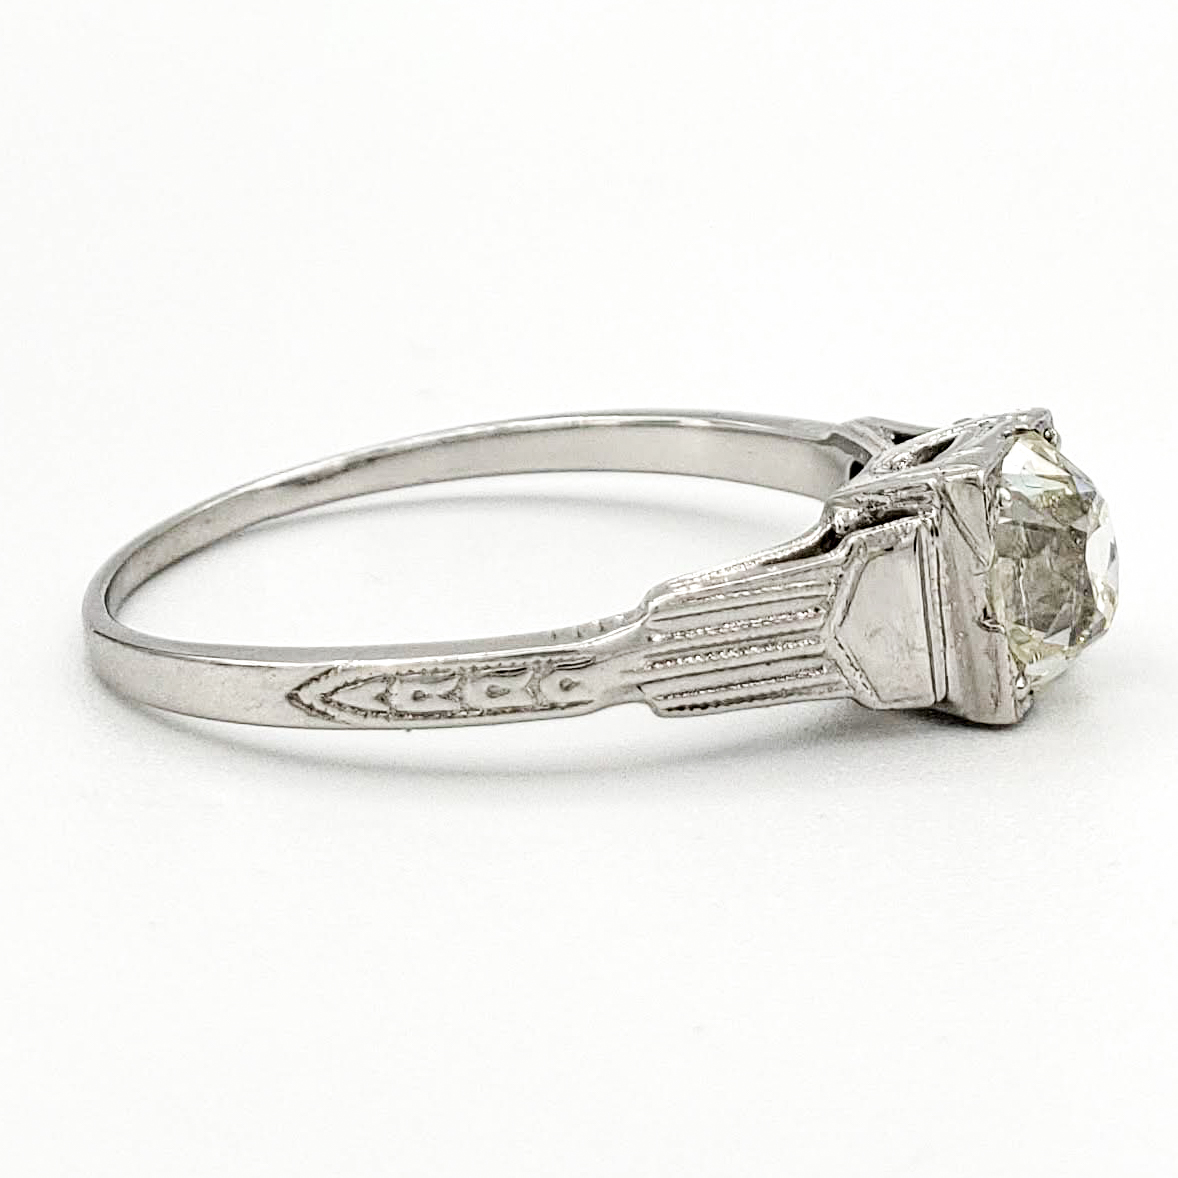 vintage-18-karat-gold-engagement-ring-with-1-00-carat-old-mine-cut-diamond-egl-k-vs2